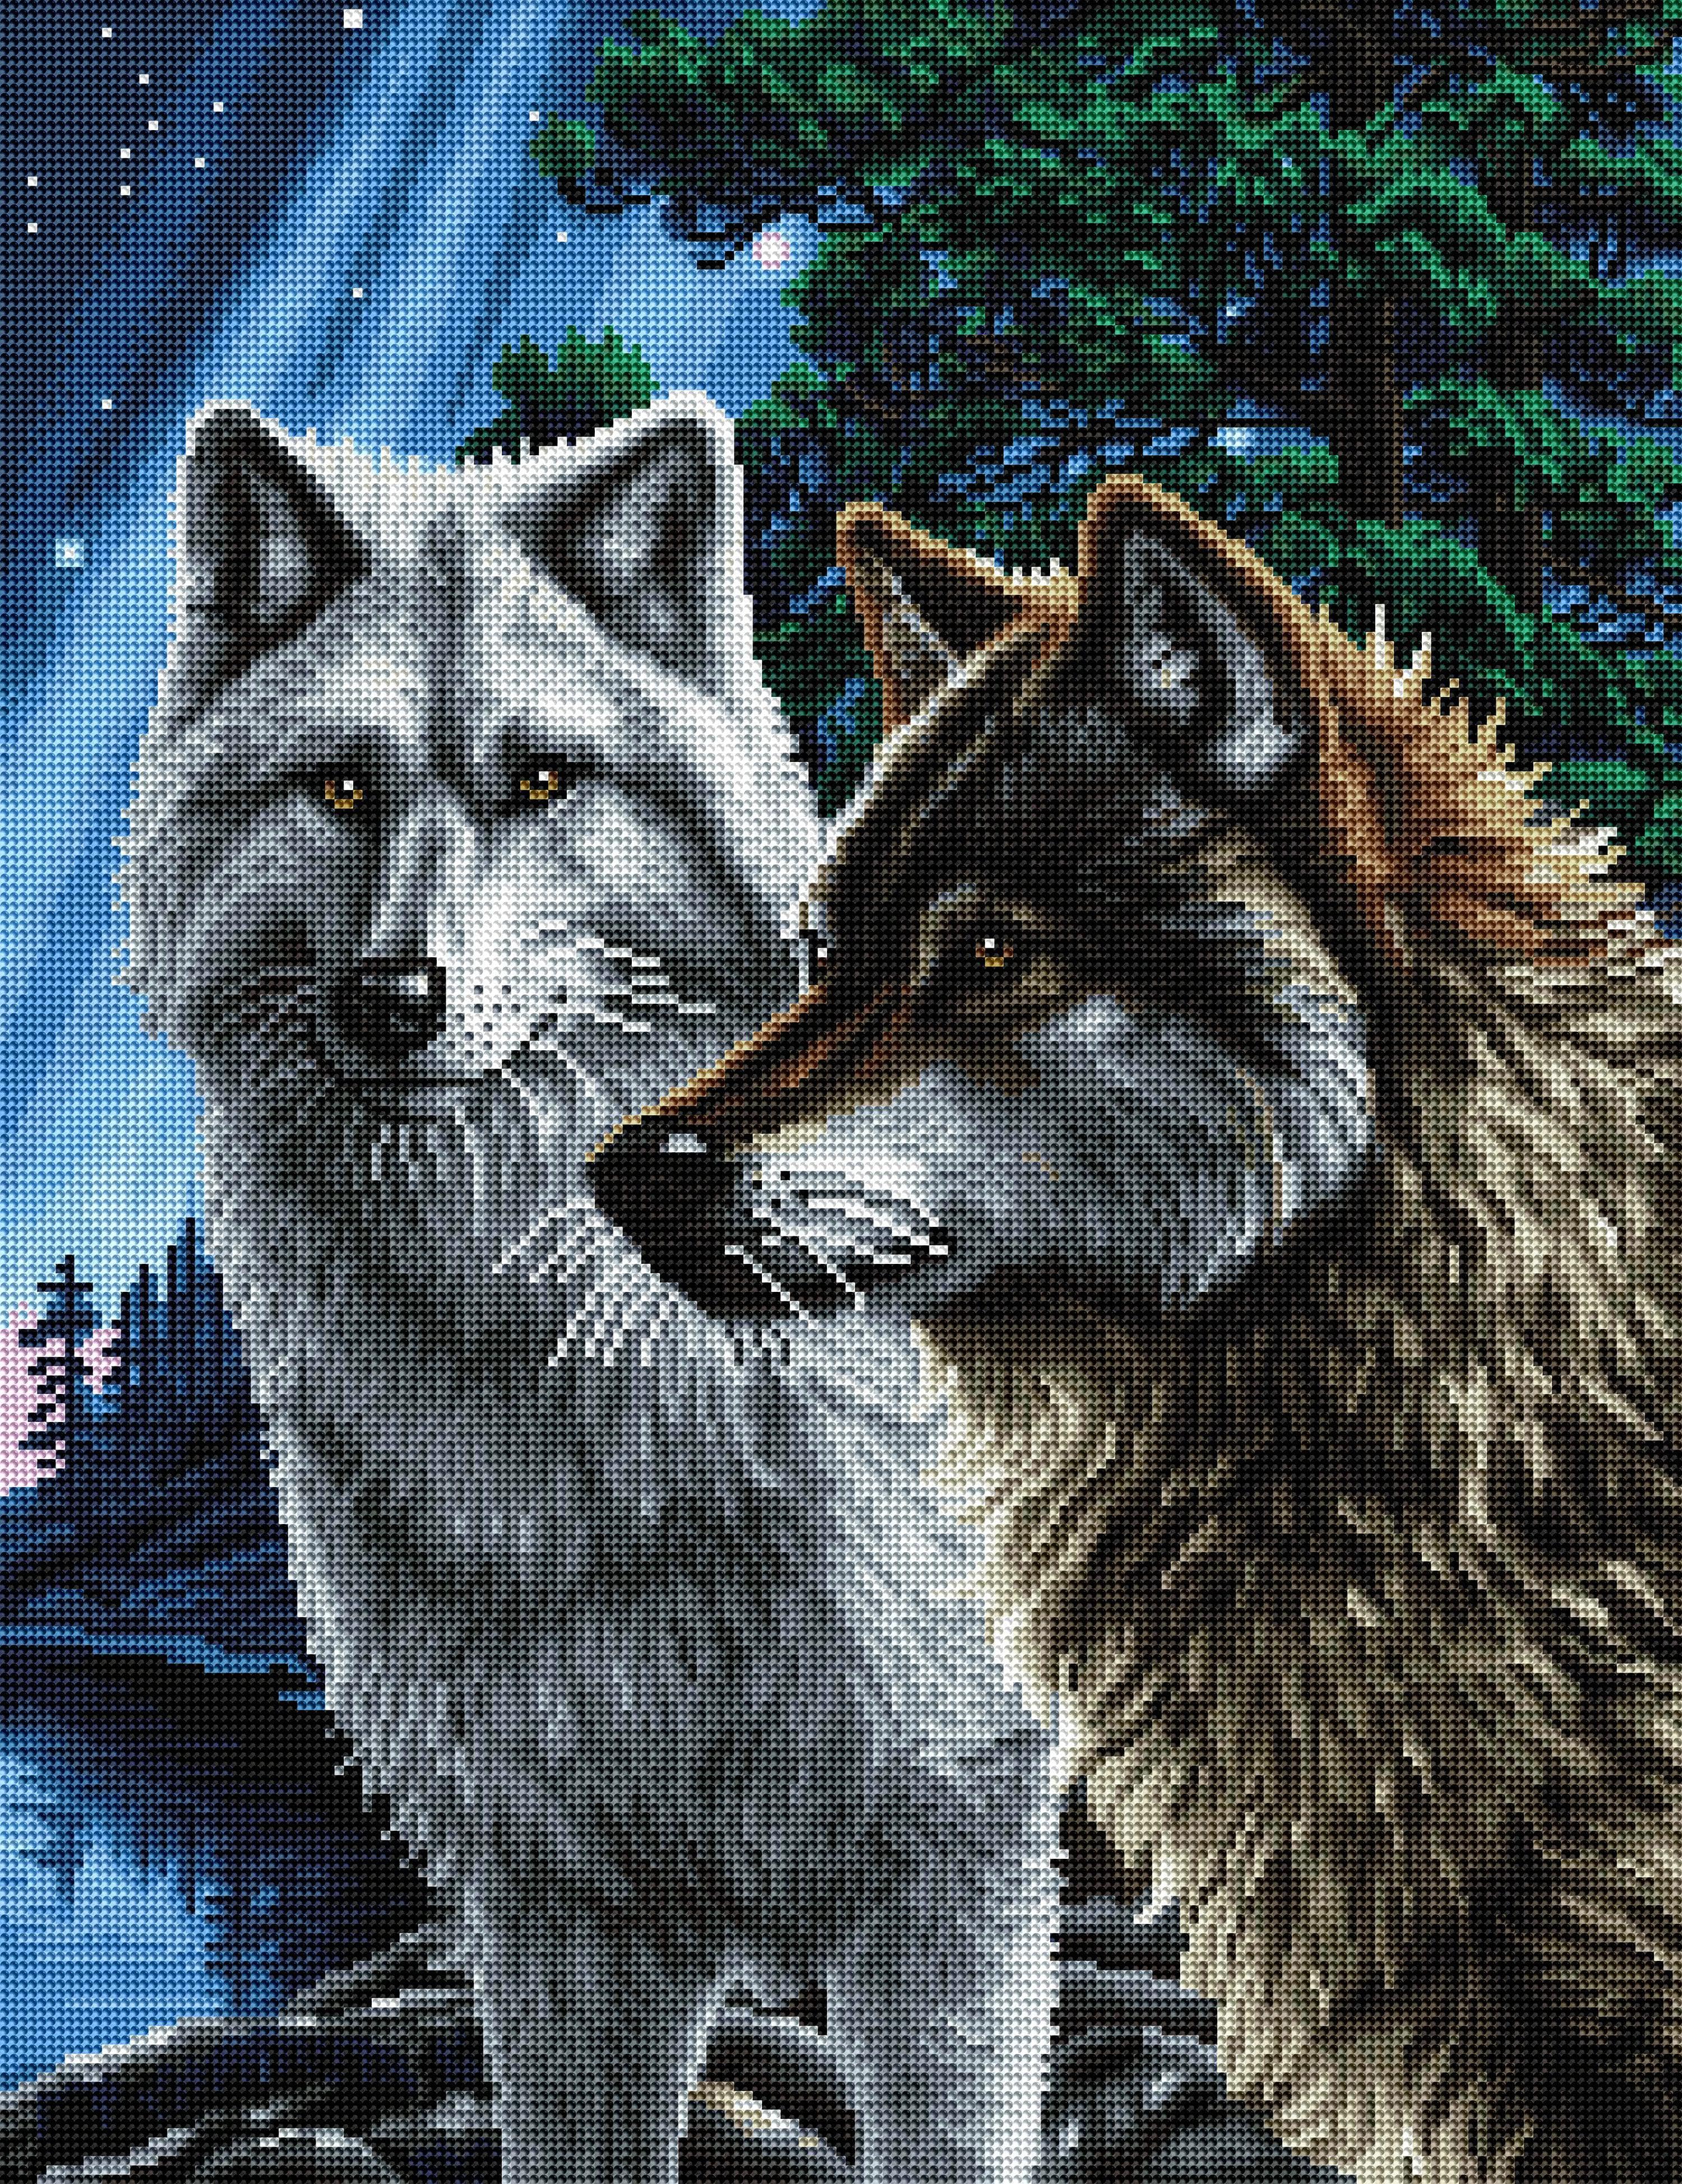 Wolf Dreamcatcher – Diamond Art Club